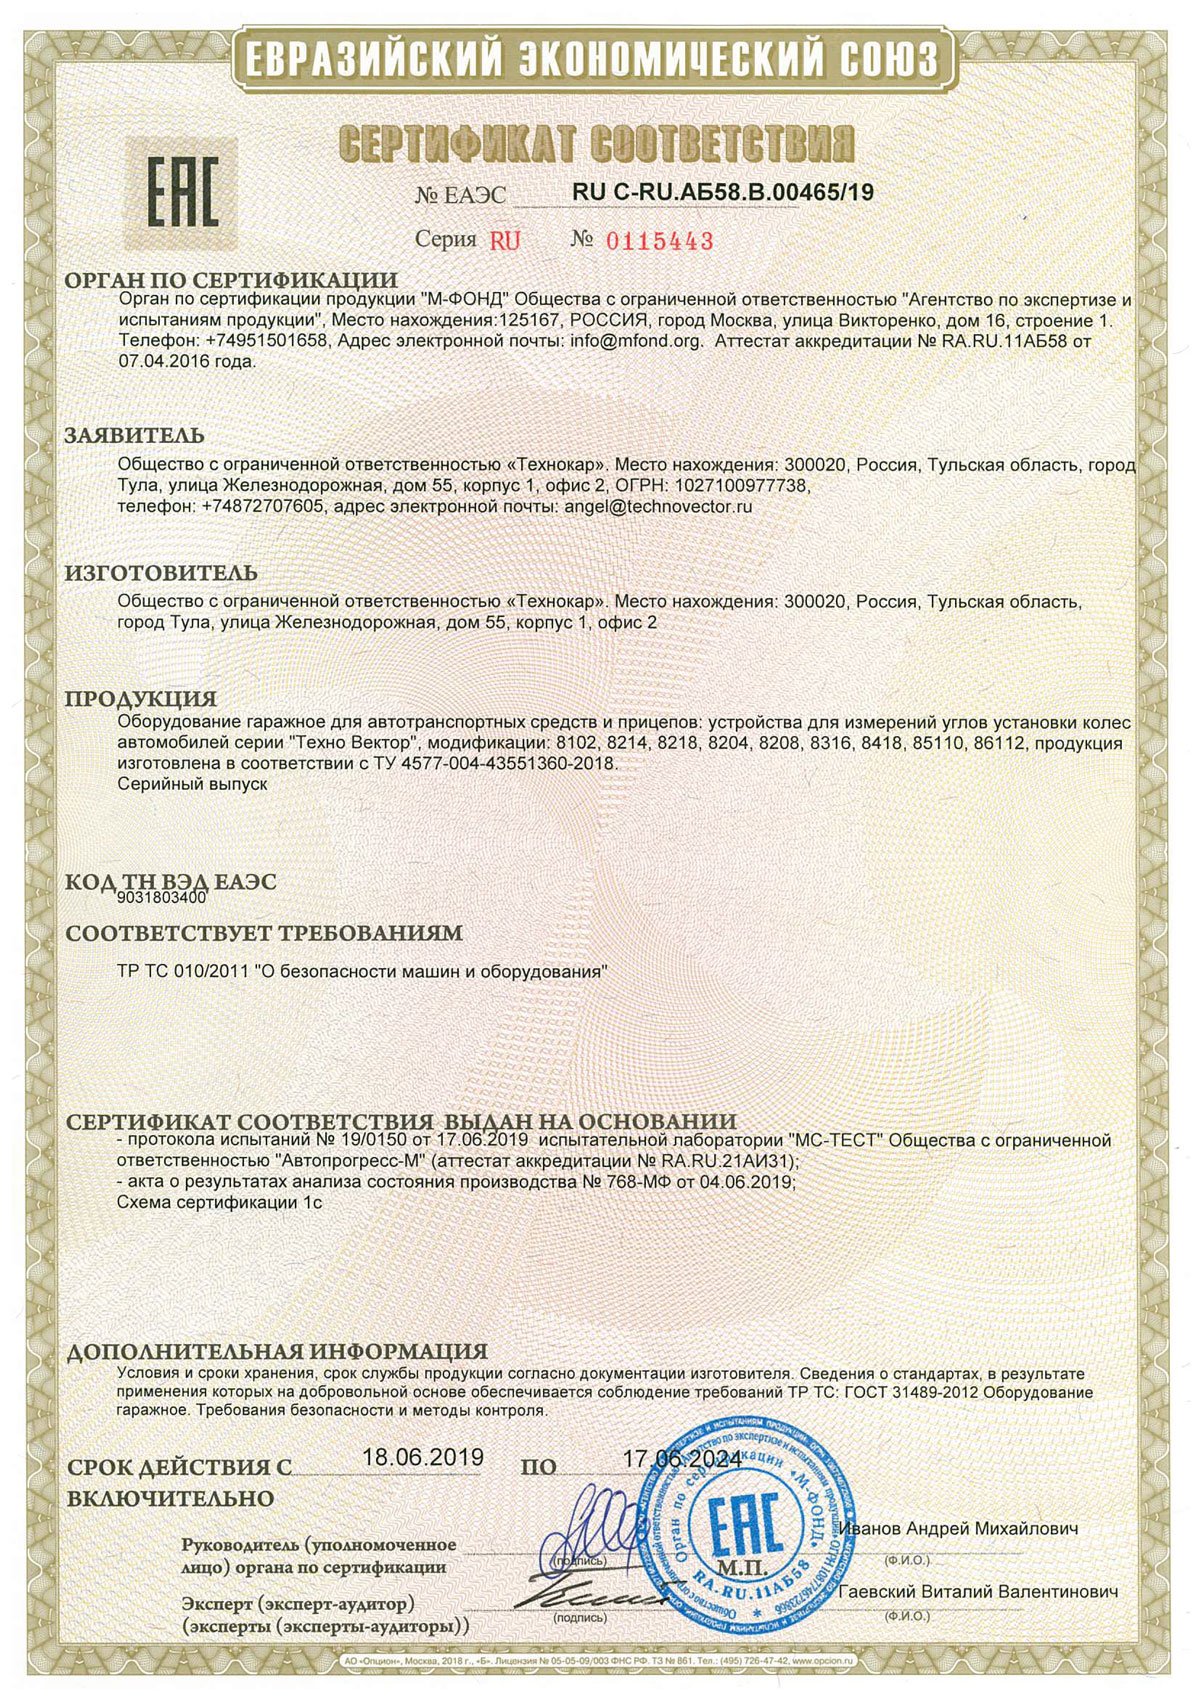 Сертификаты ТехноВектор - фото sertifikat.jpg